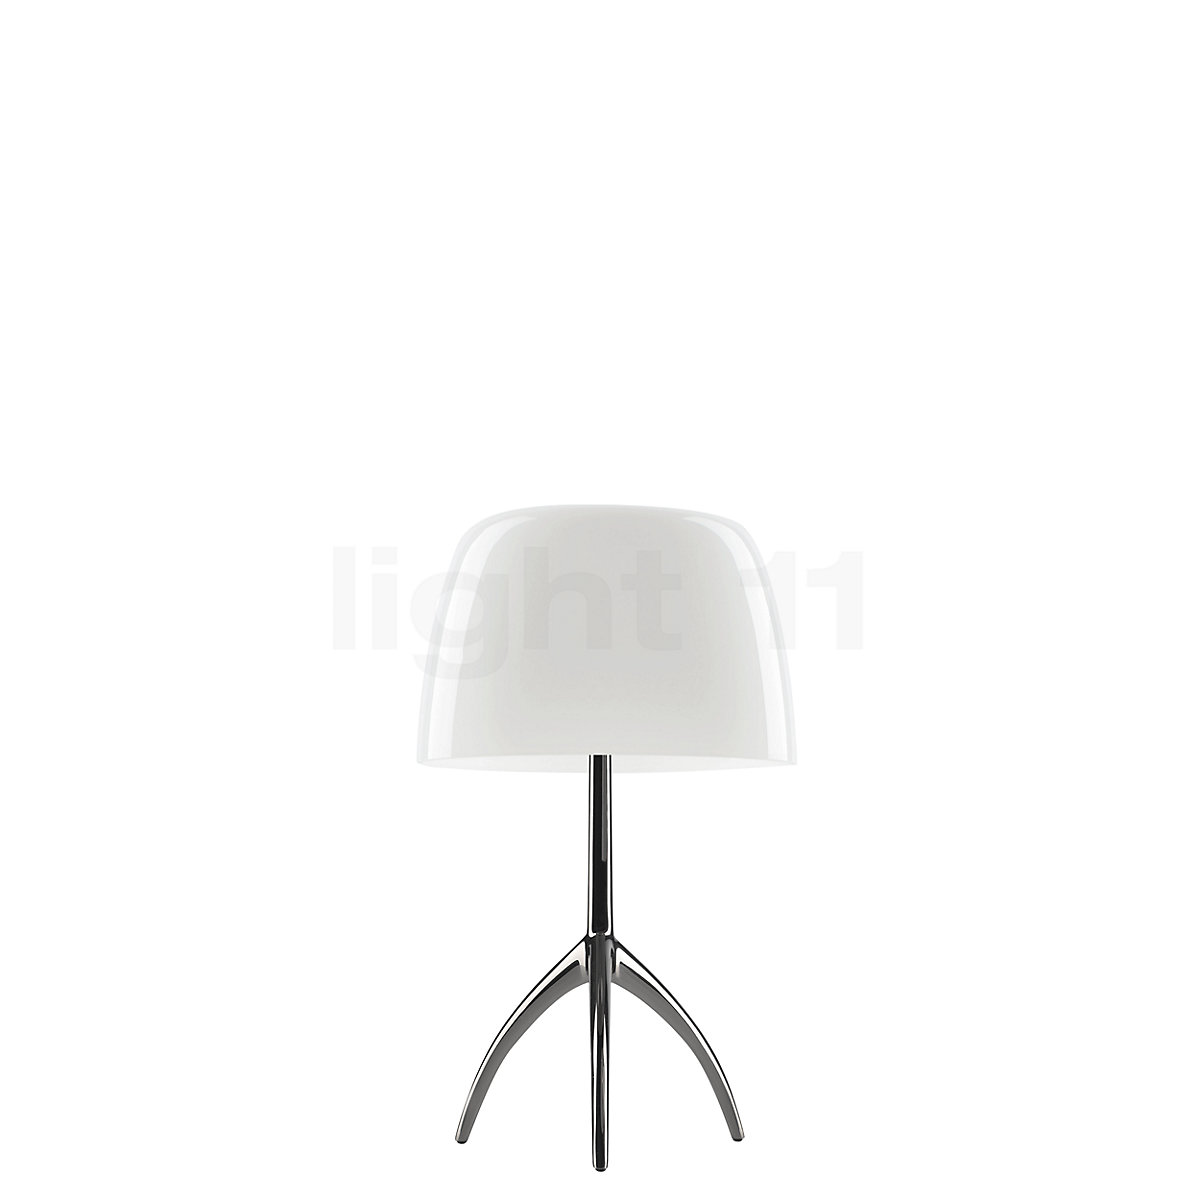 Opeenvolgend vuist schraper Buy Foscarini Lumiere Table Lamp Piccola at light11.eu